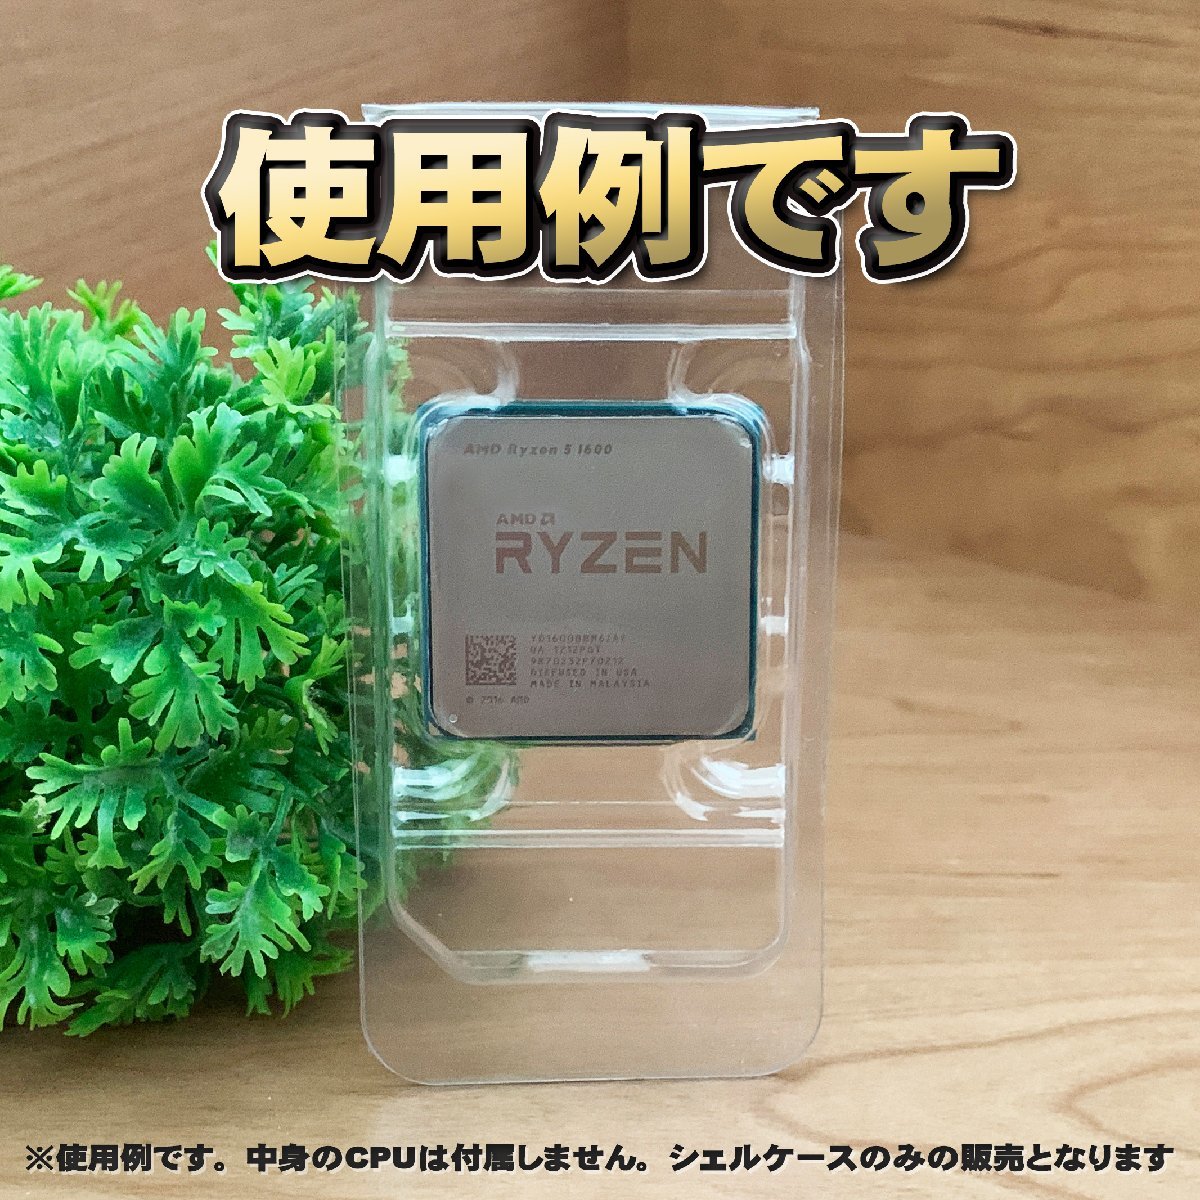 [ improvement version ][ AM2 correspondence ]CPU shell case AMD for plastic [AM4. RYZEN also correspondence ] storage storage case 20 sheets 